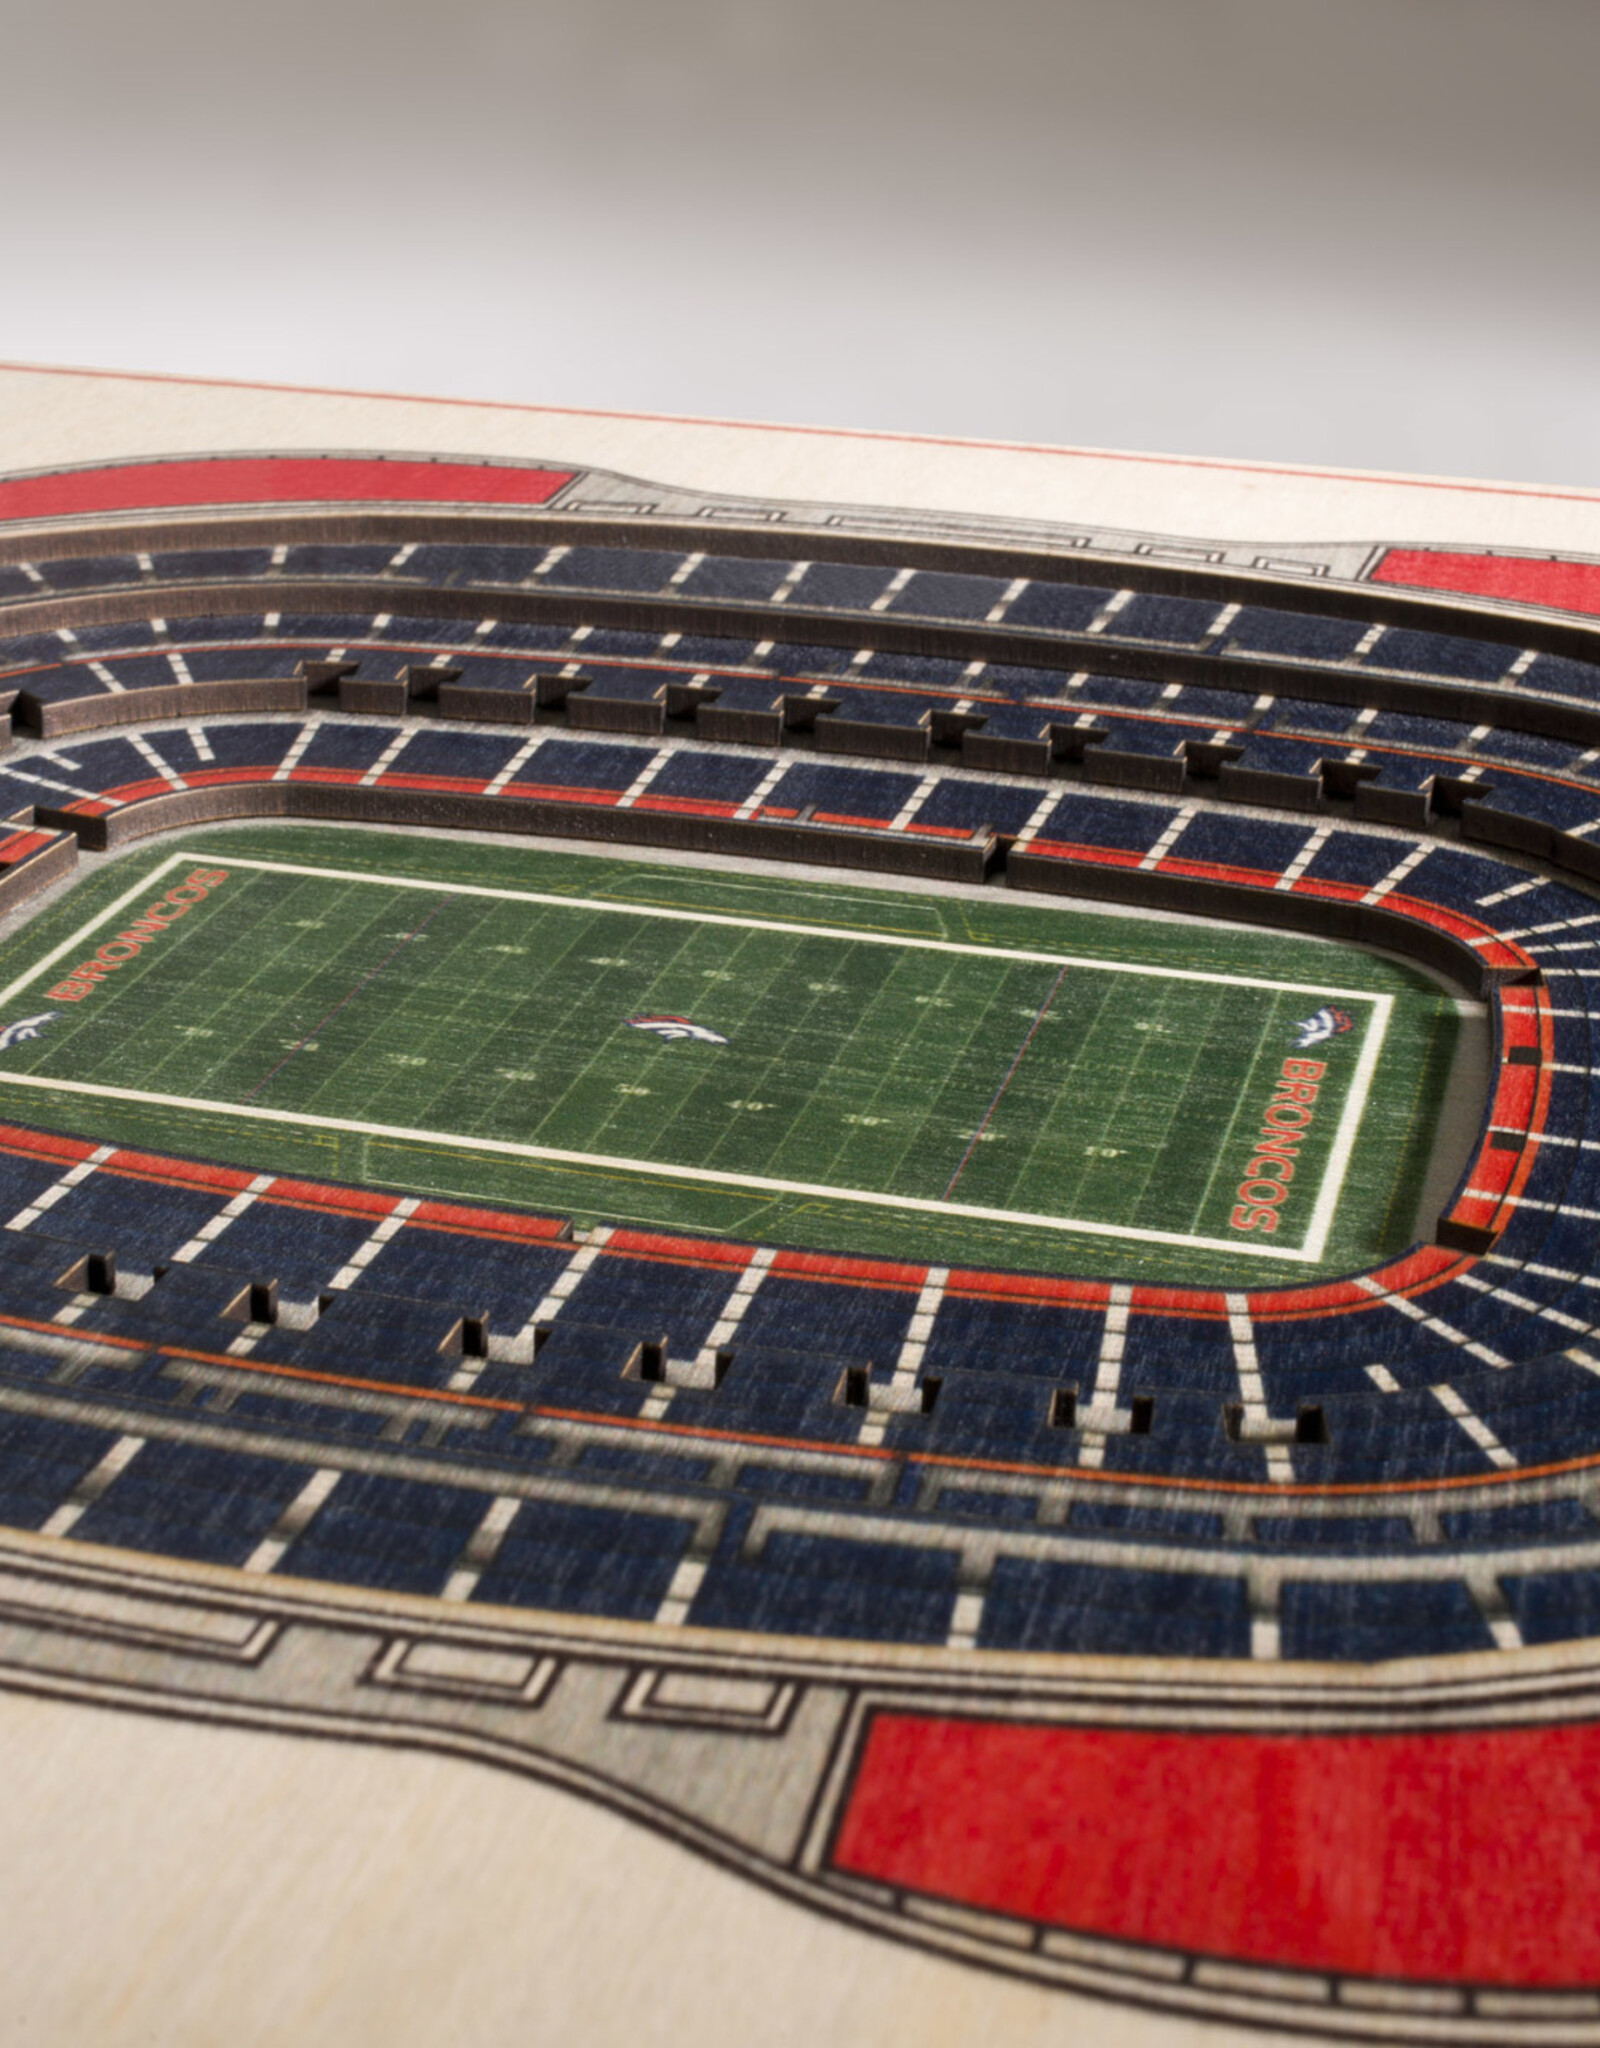 YOU THE FAN Denver Broncos 5-Layer 3D StadiumView Wall Art